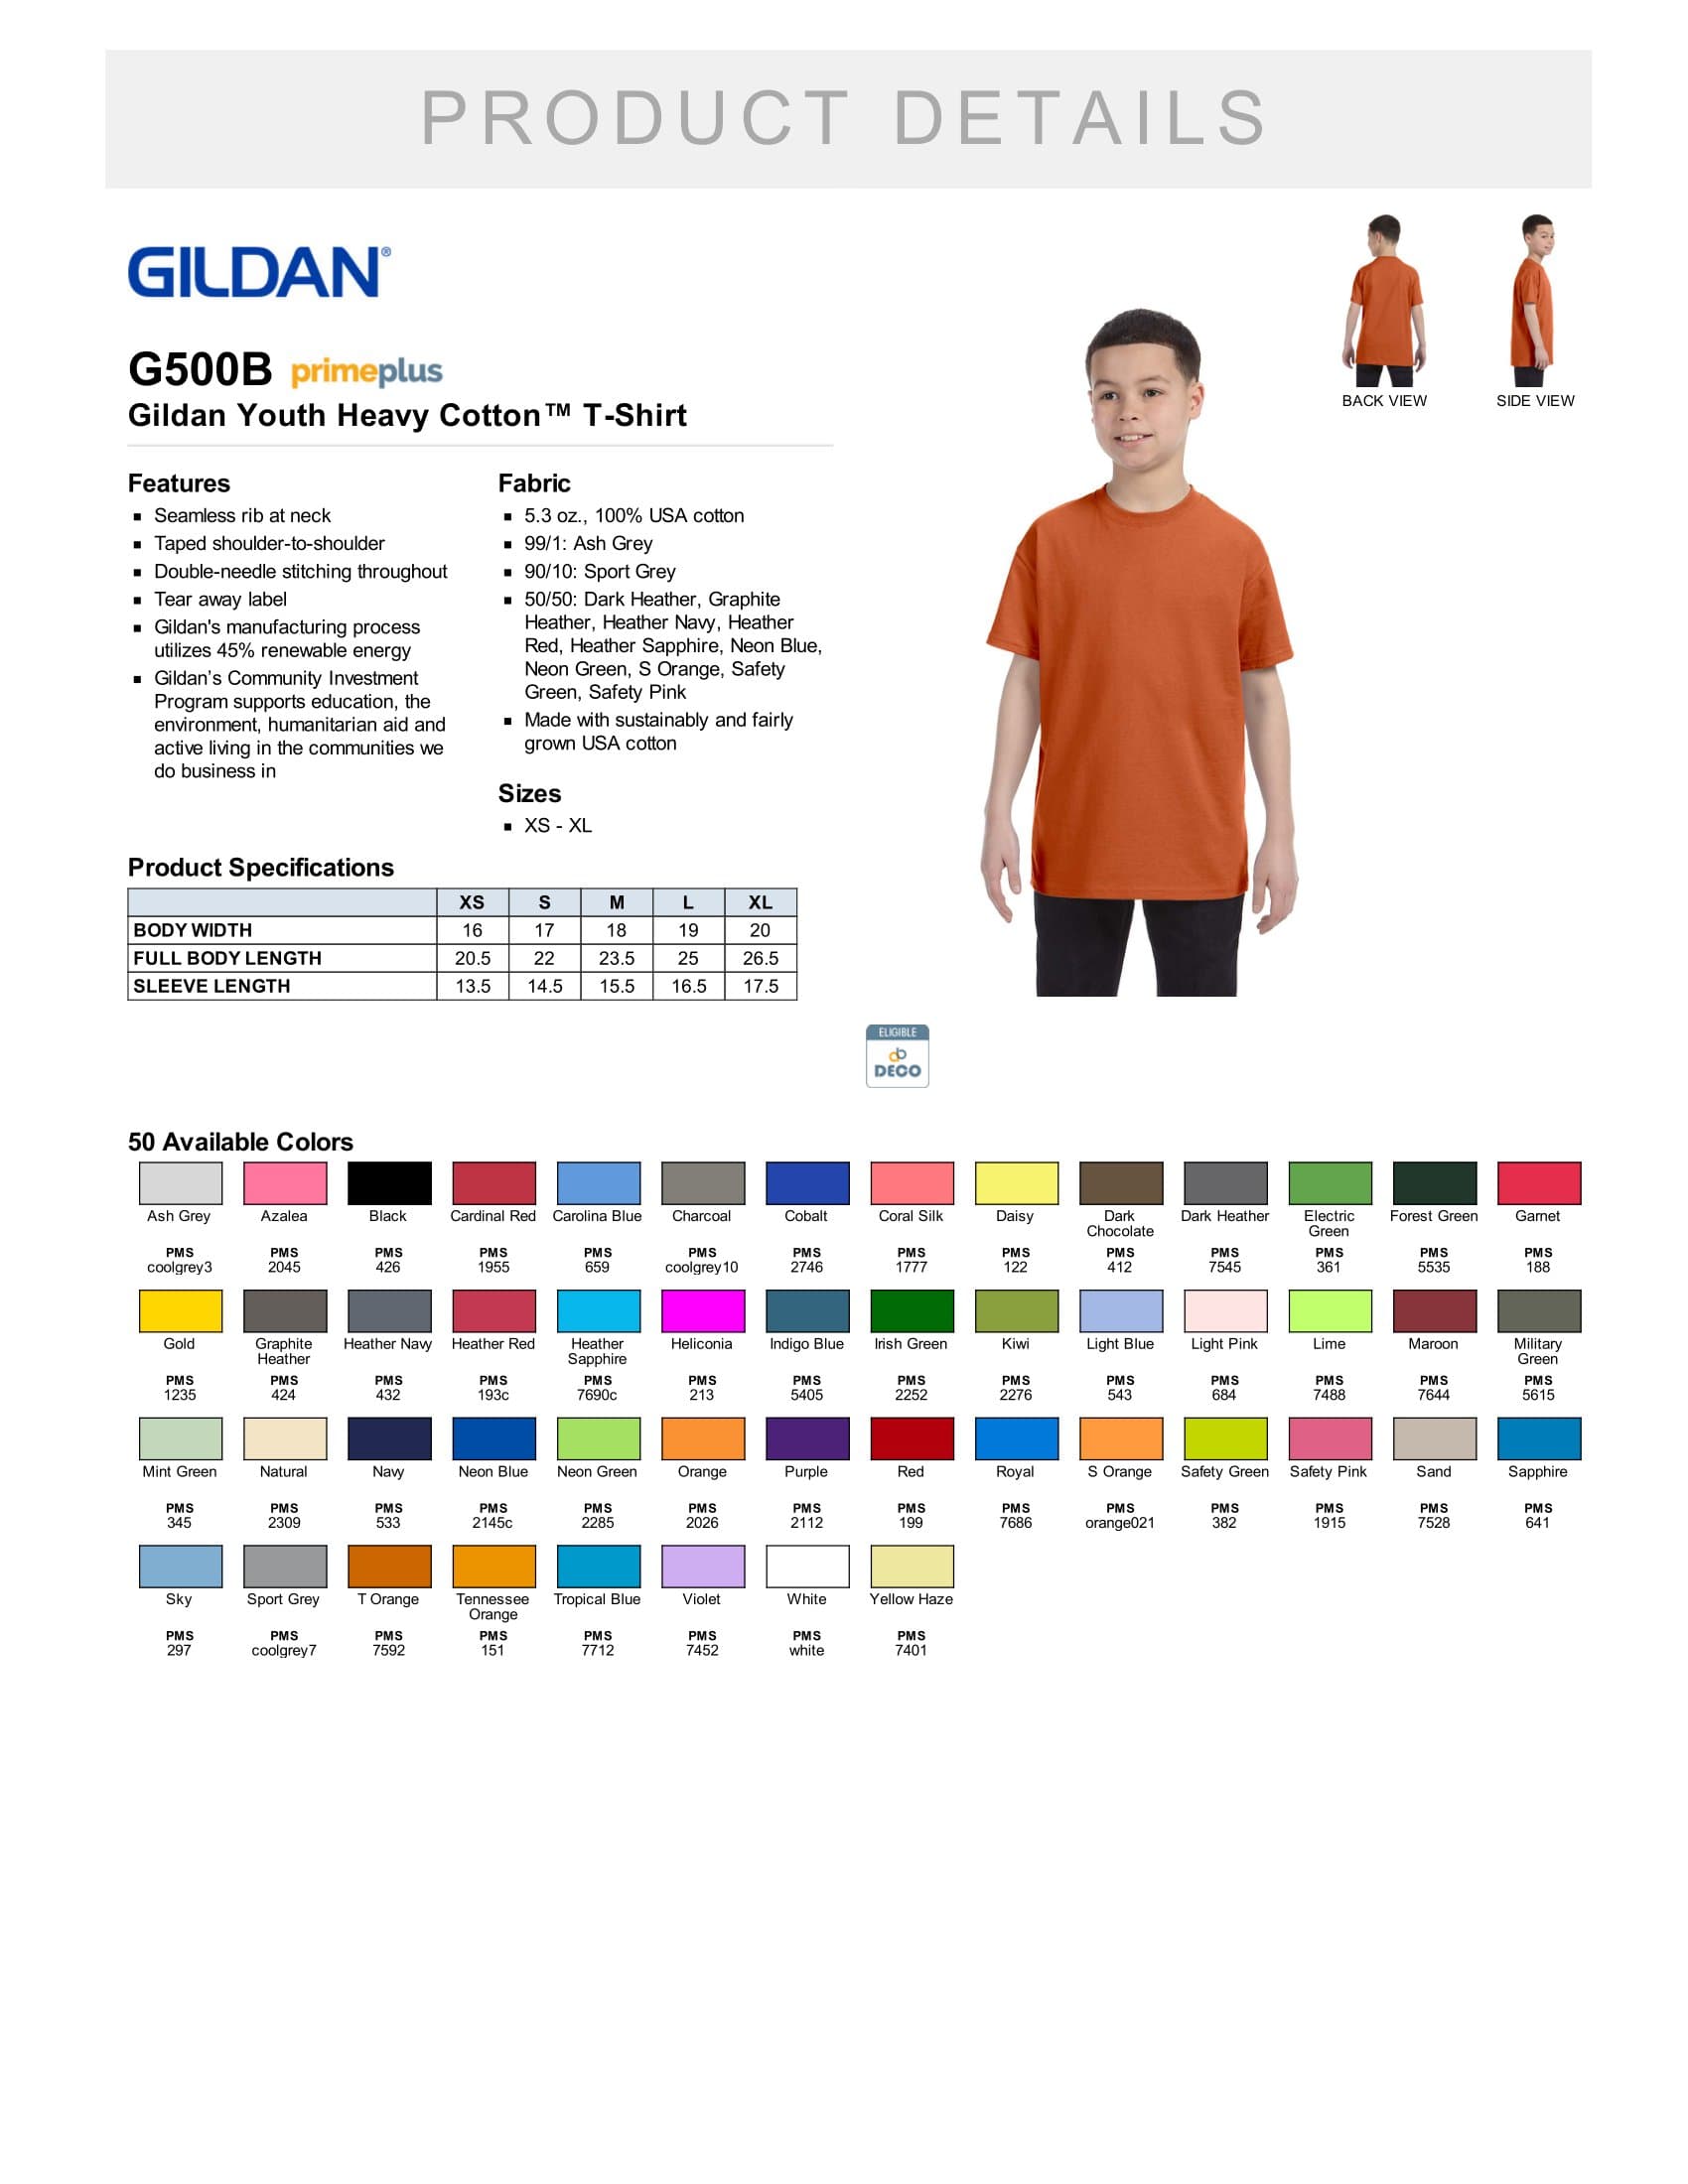 Gildan G500B